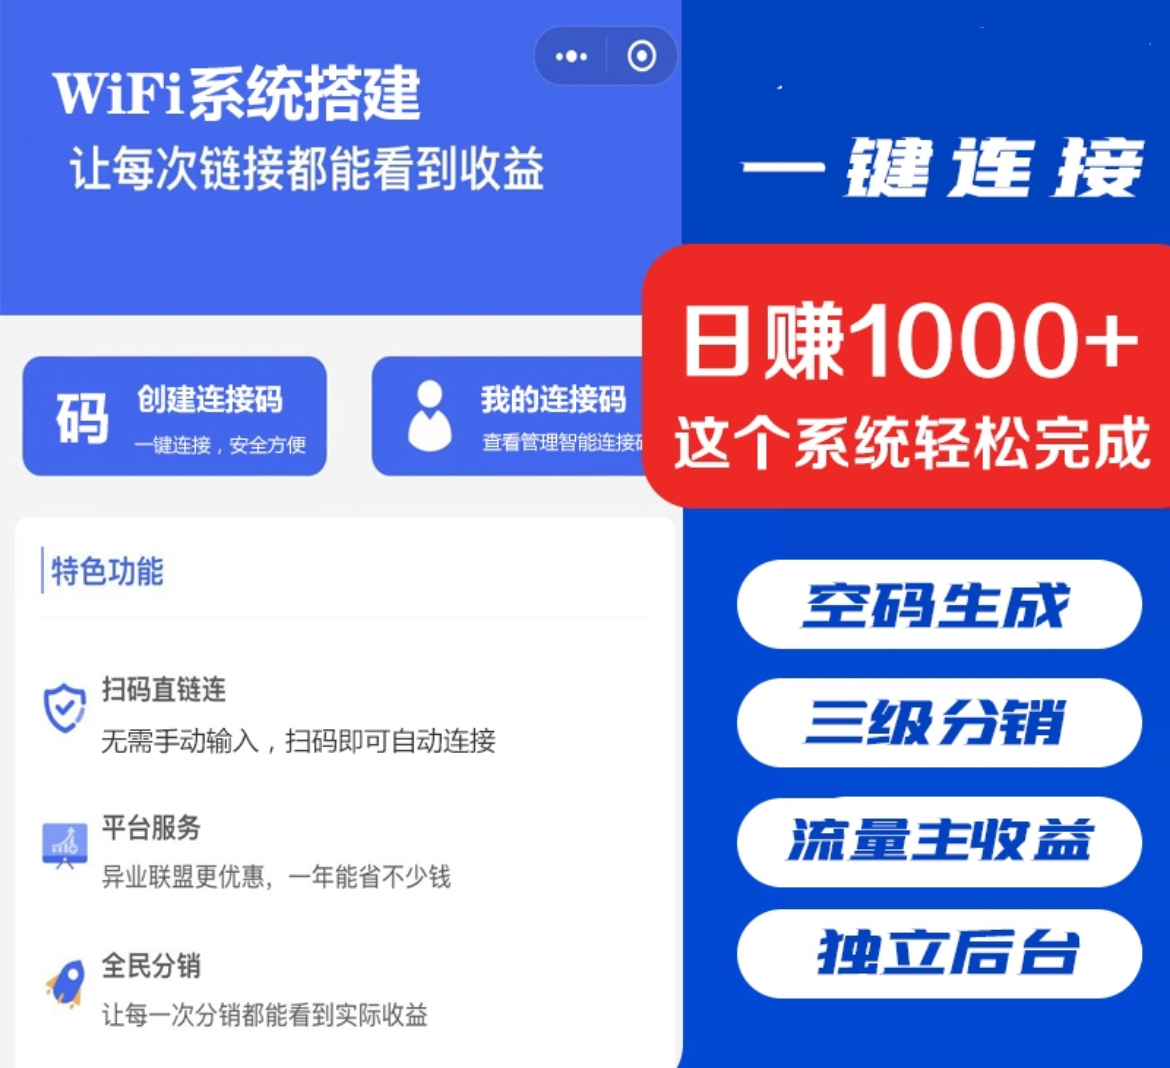 WiFi营销小程序共享WiFi门店一键免密码连接WiFi流量主分销小程序-智宇达资源网